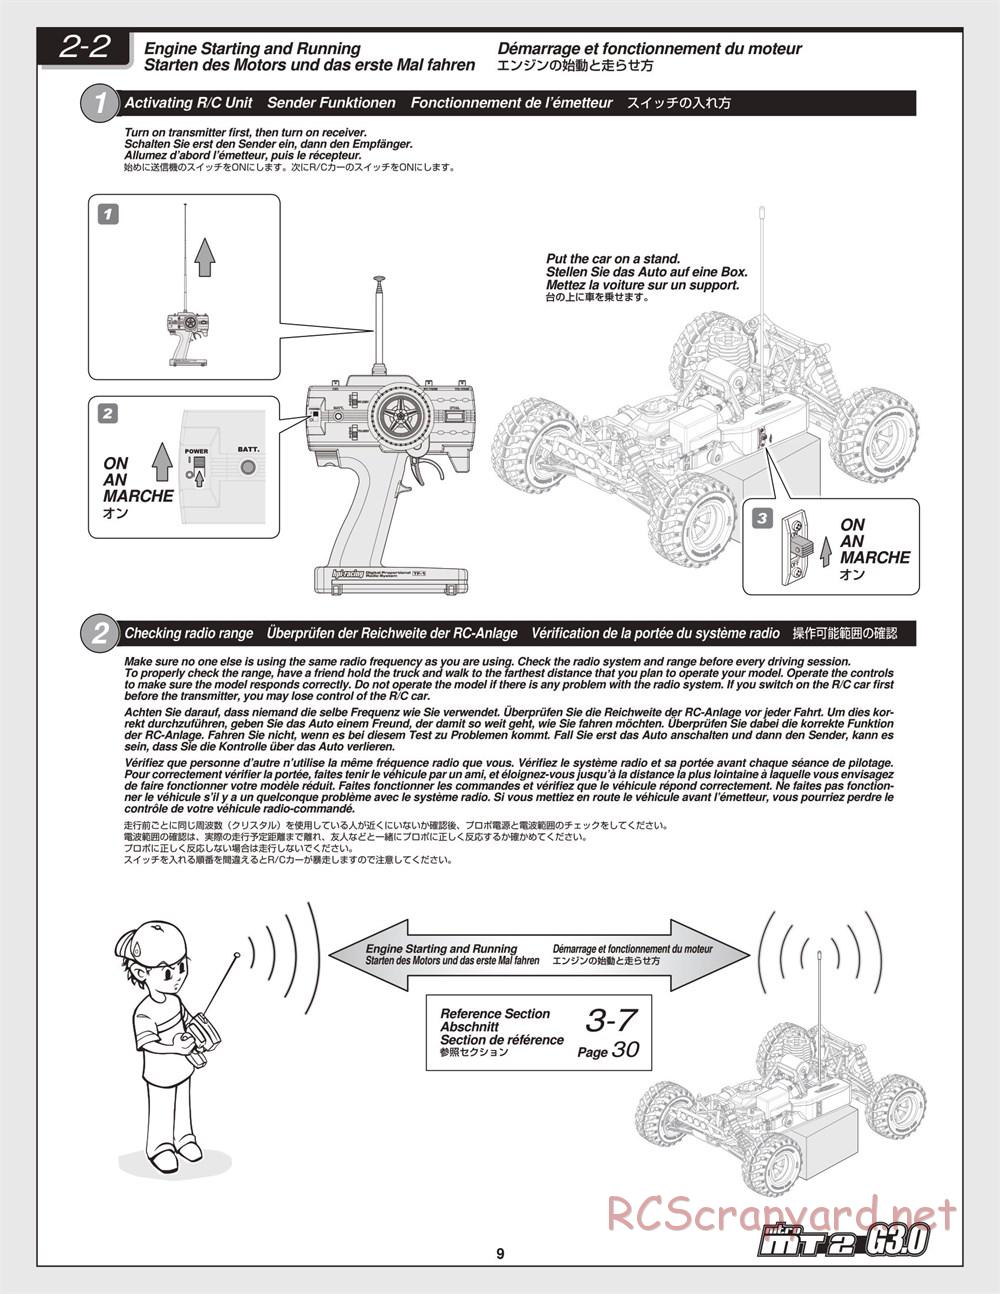 HPI - Nitro MT2 G3.0 - Manual - Page 9